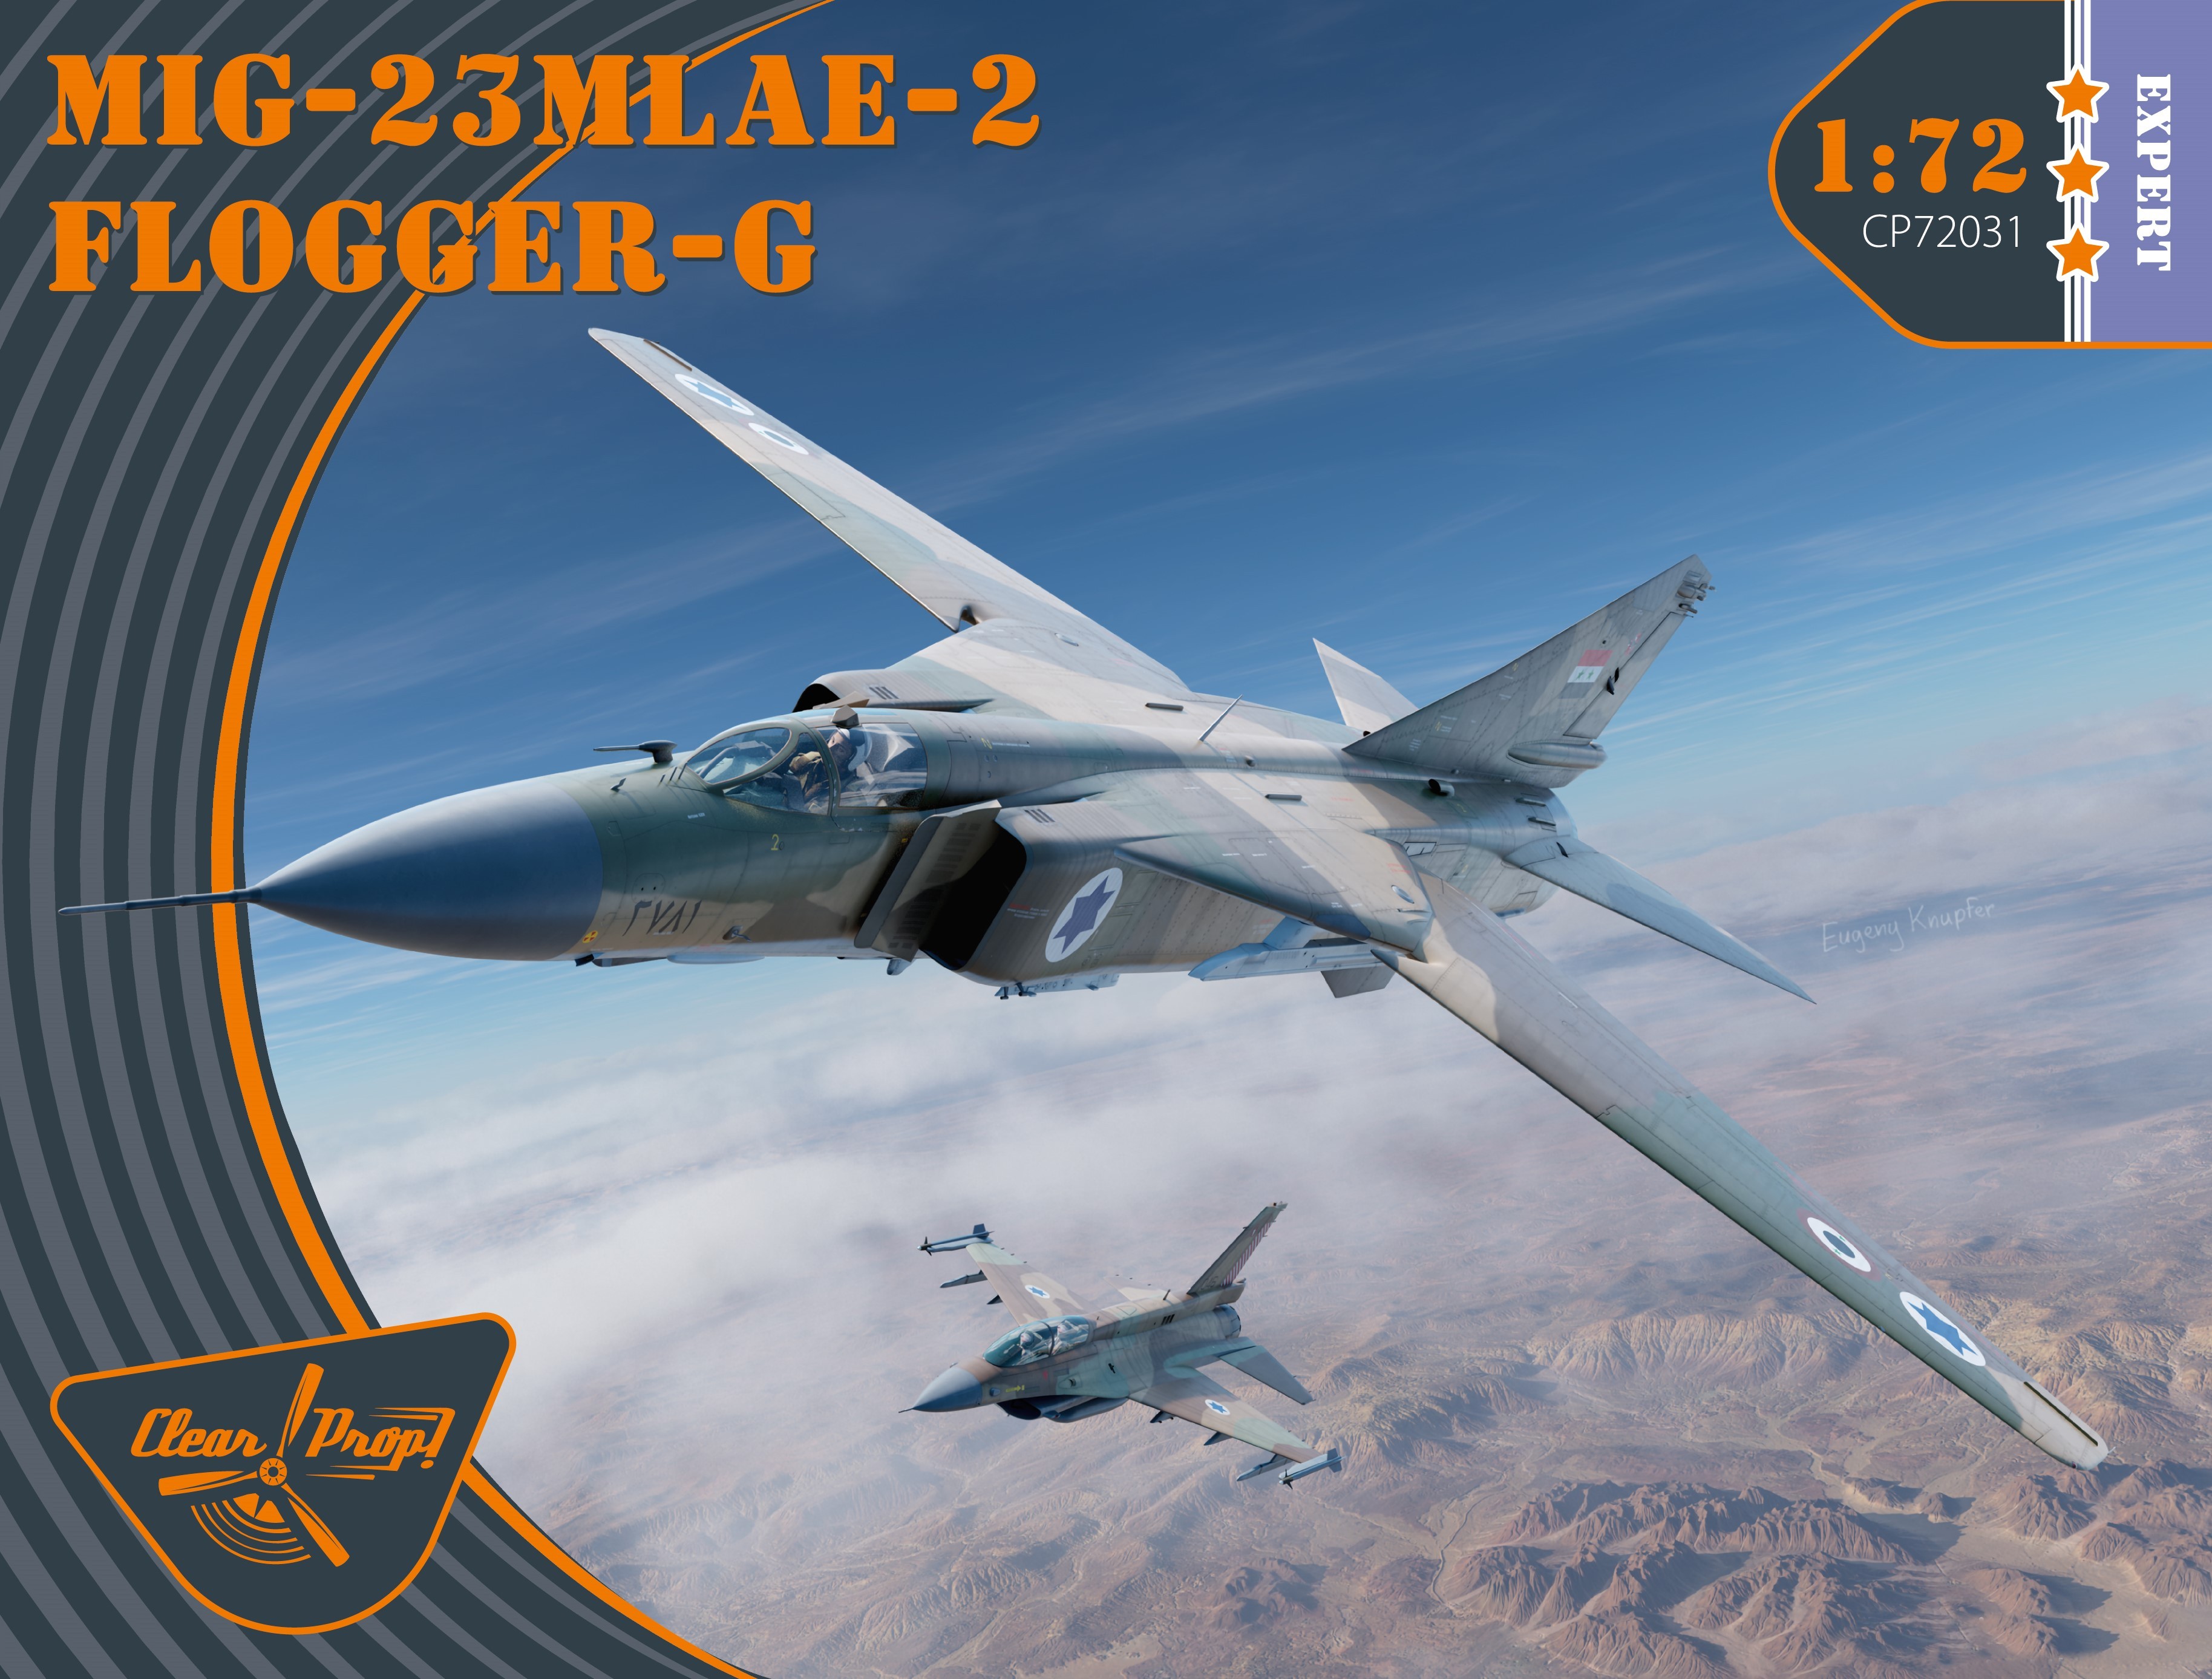 Model kit 1/72 Mikoyan MiG-23MLAE-2 Flogger-G Expert kit  (Clear Prop)